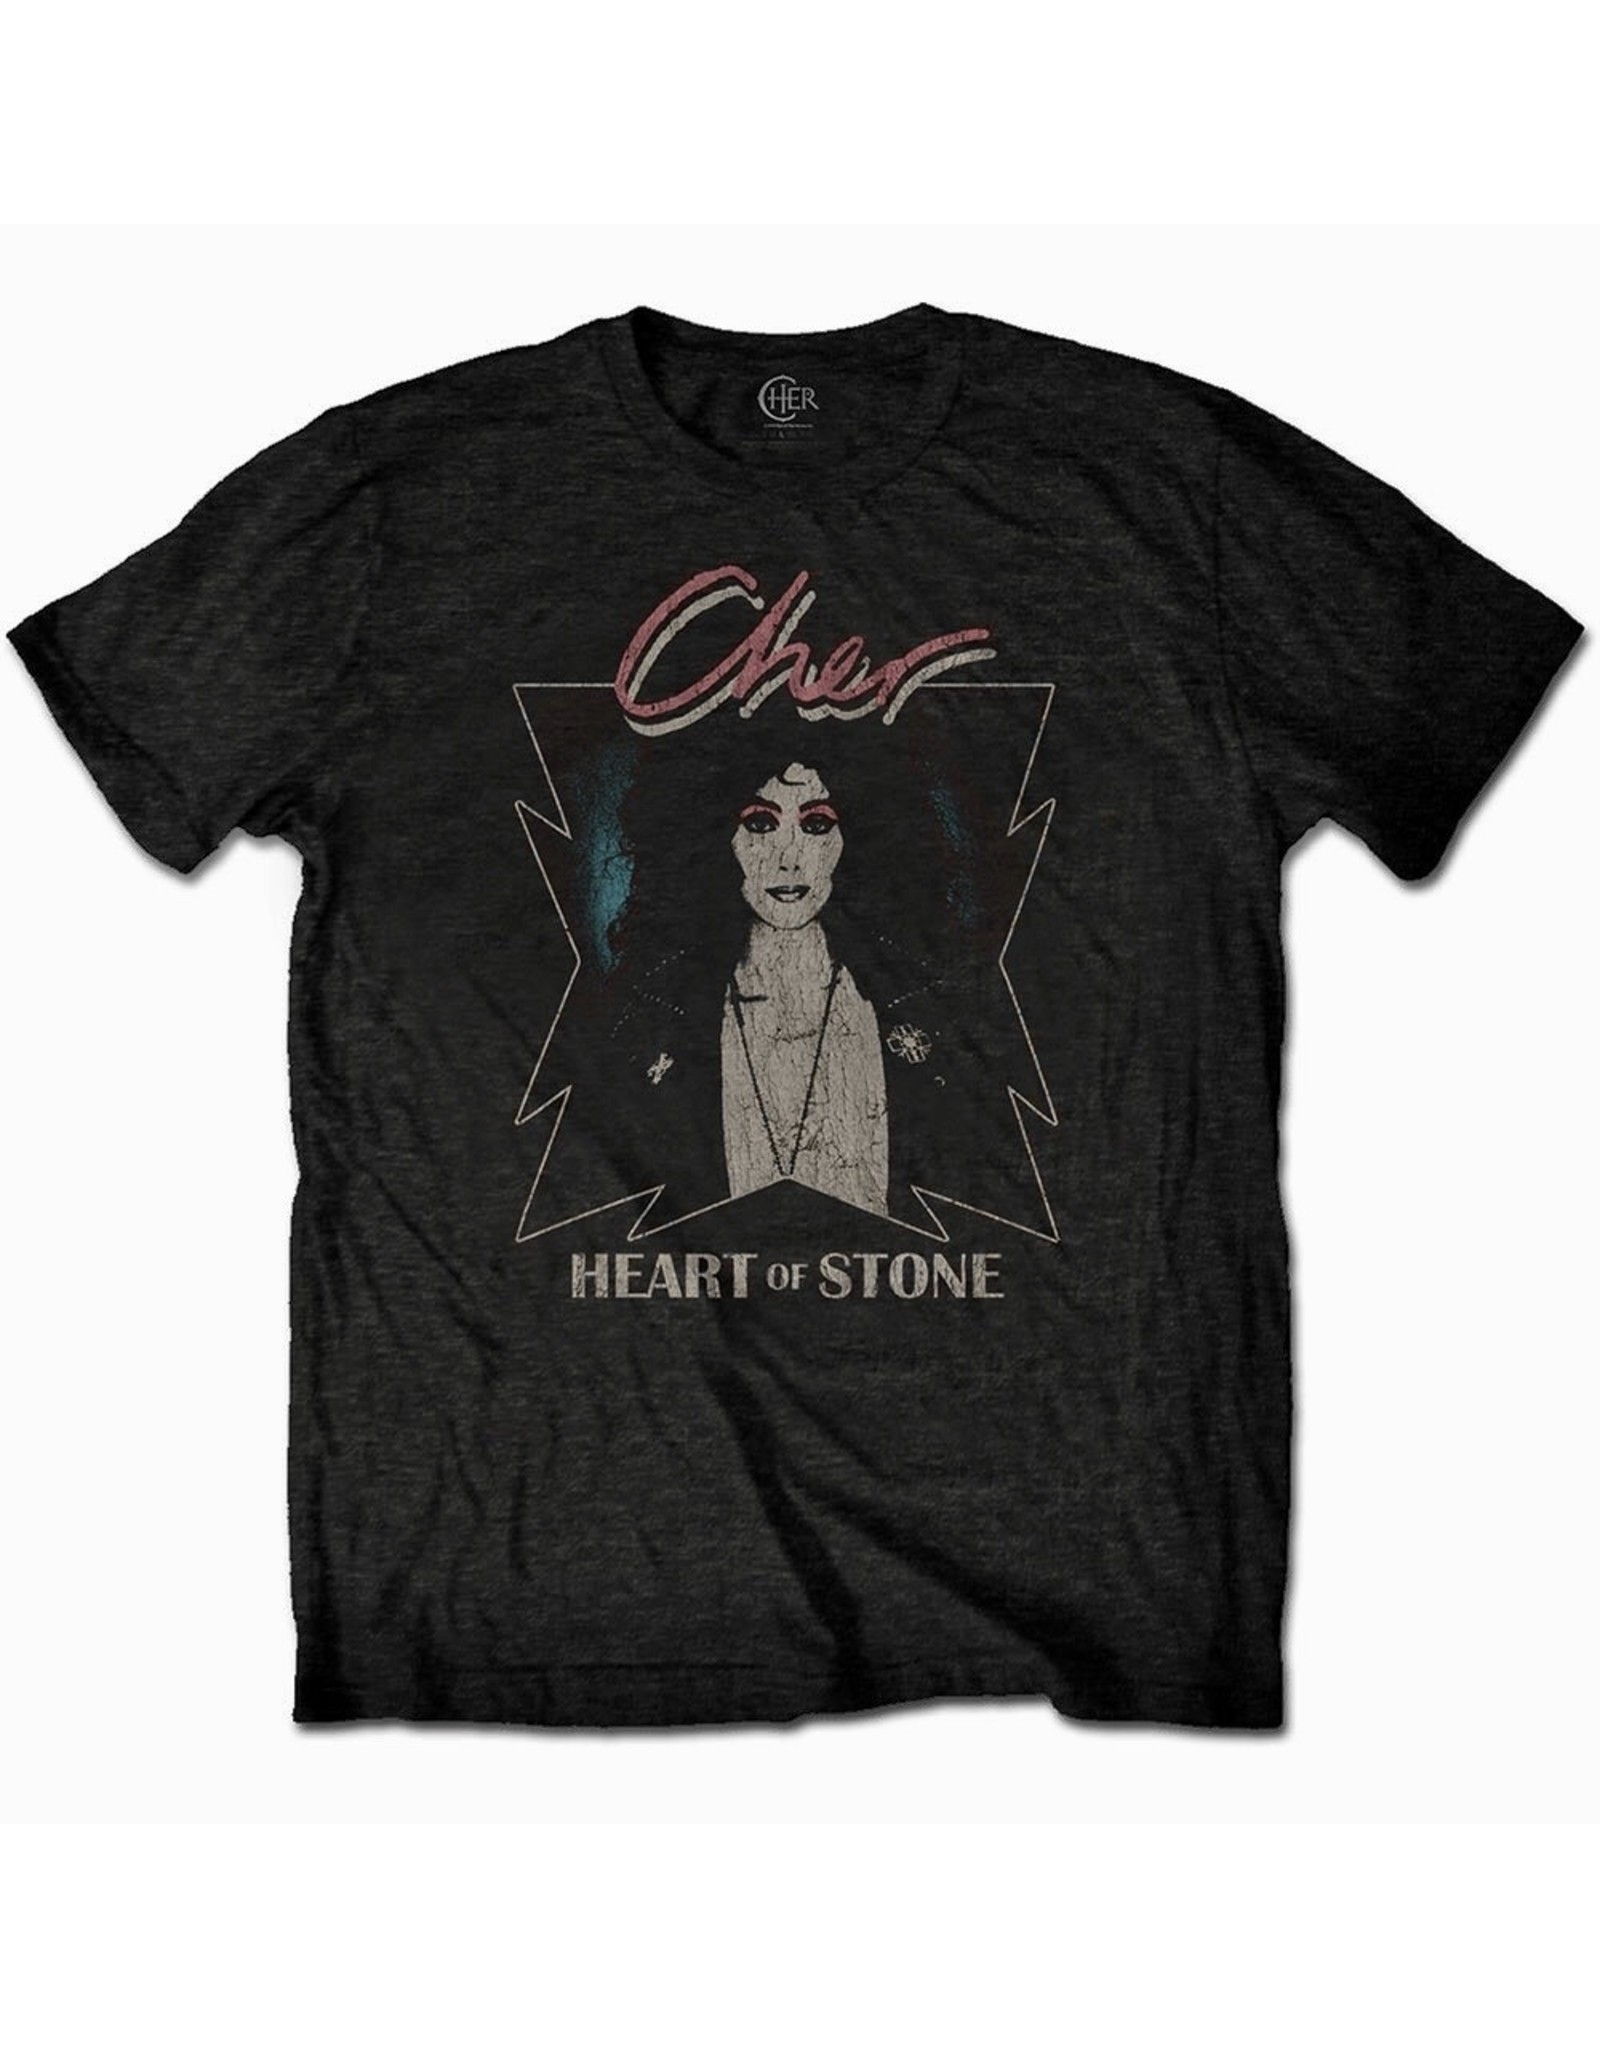 Cher / Heart Of Stone Tee